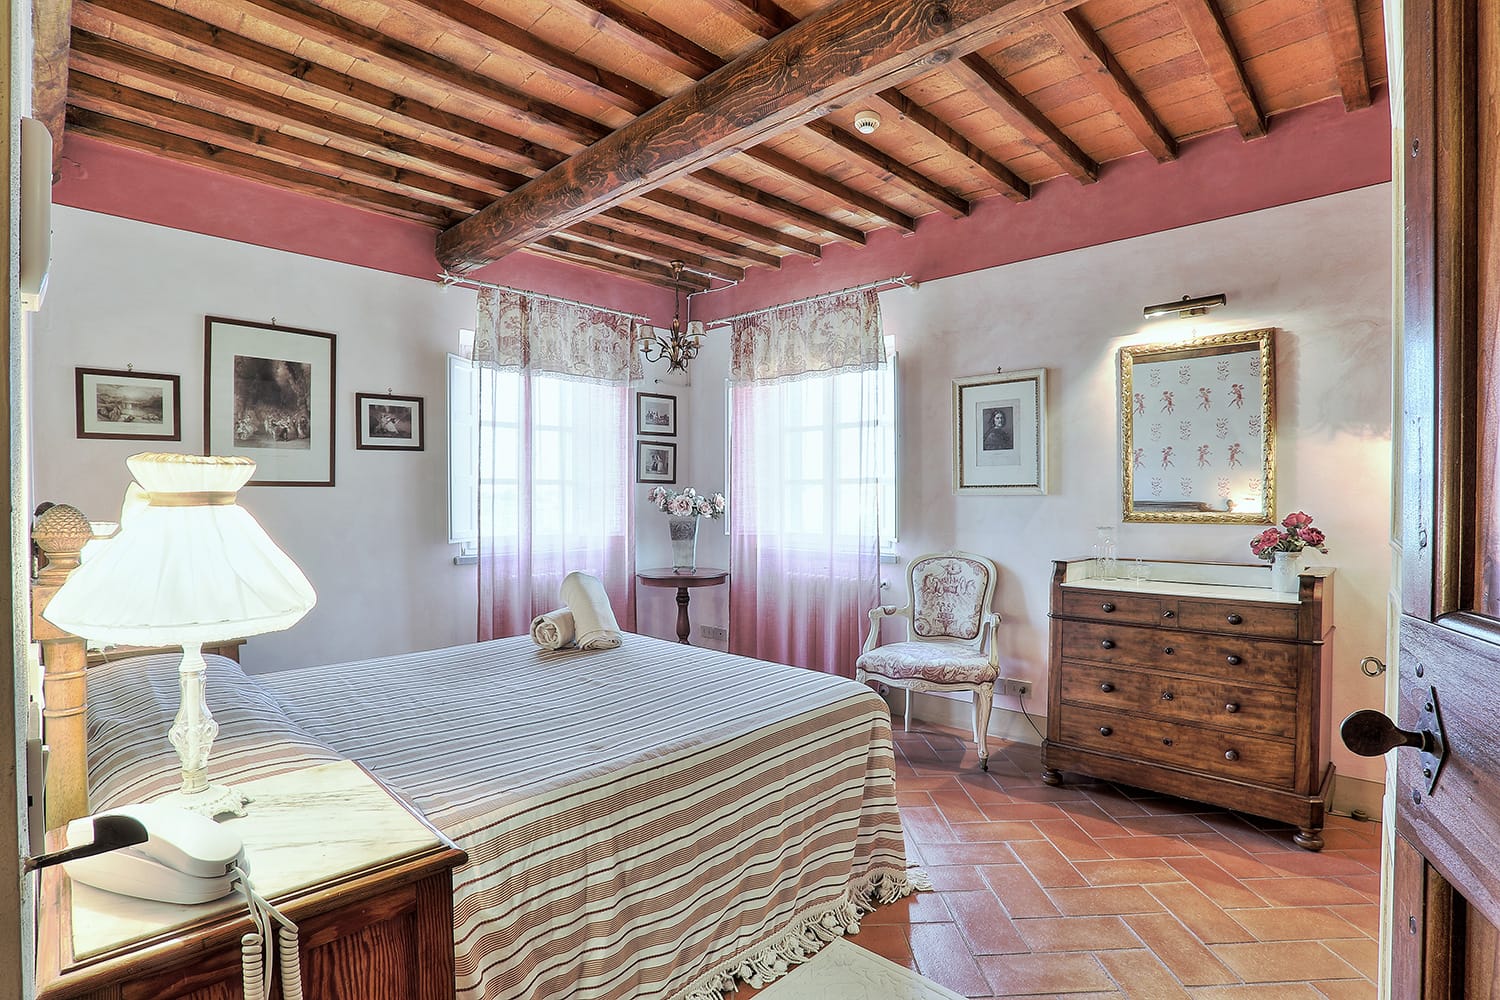 L’ Antico Camino slaapkamer